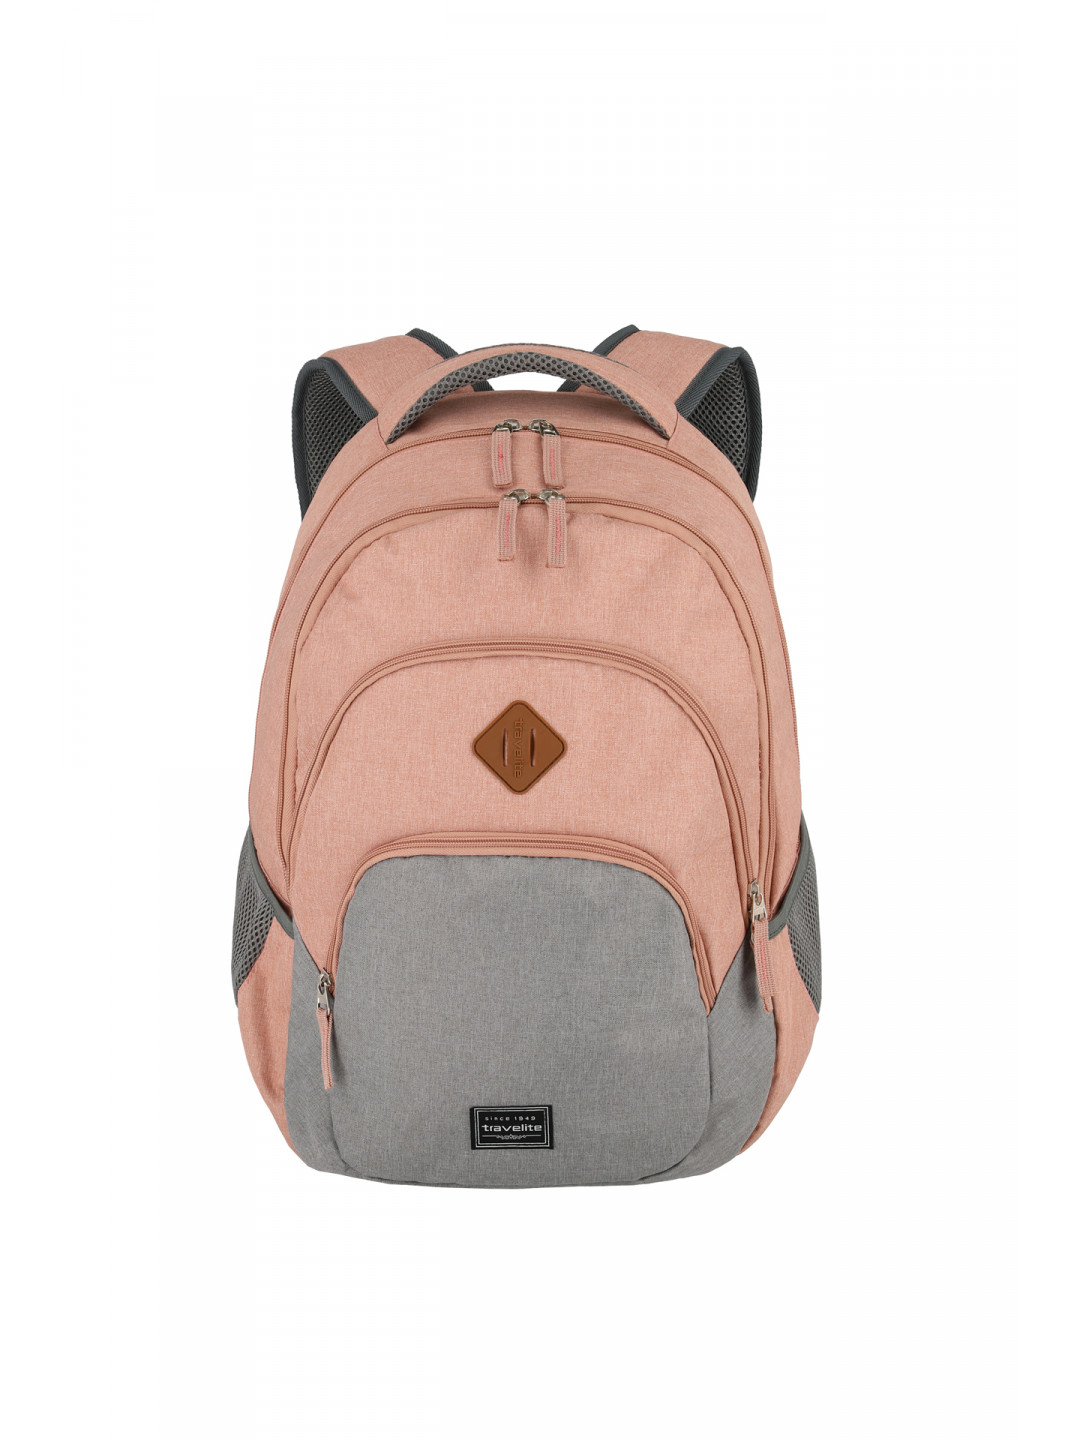 Travelite Basics Backpack Melange Rose grey